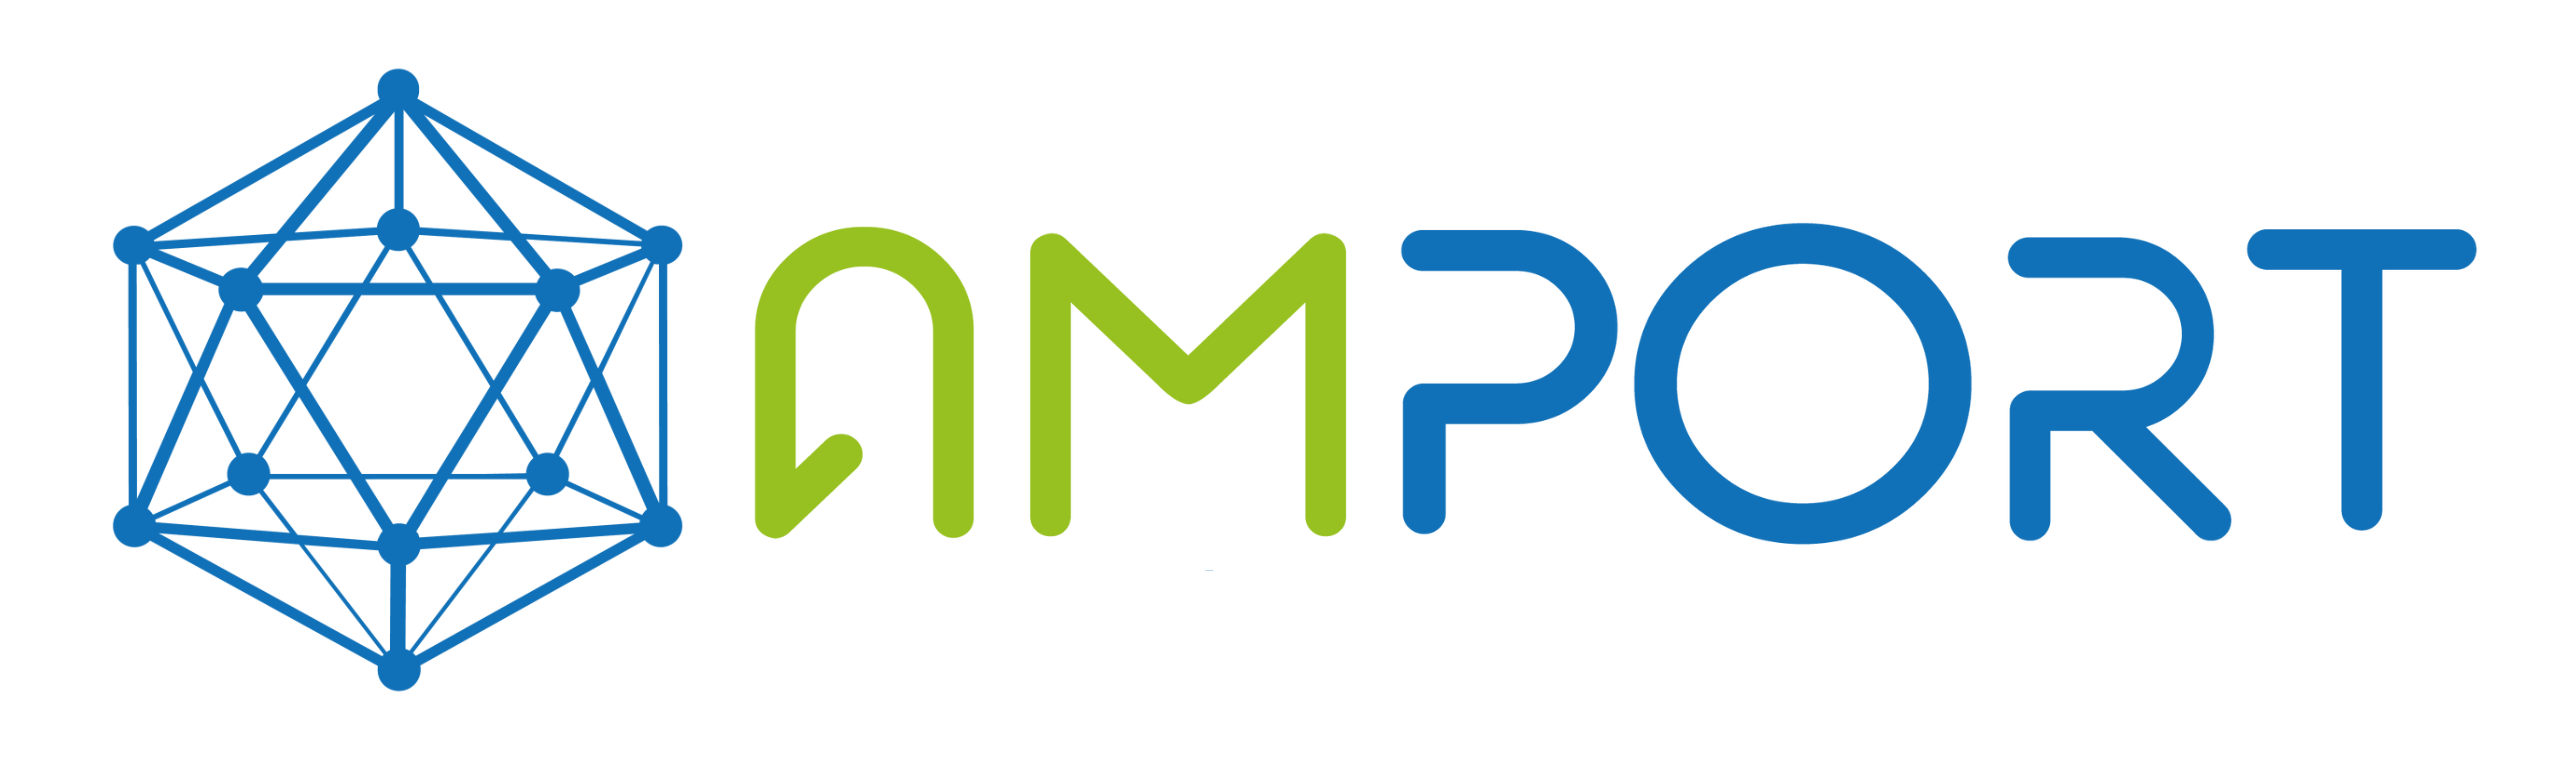 Logomarca Amport